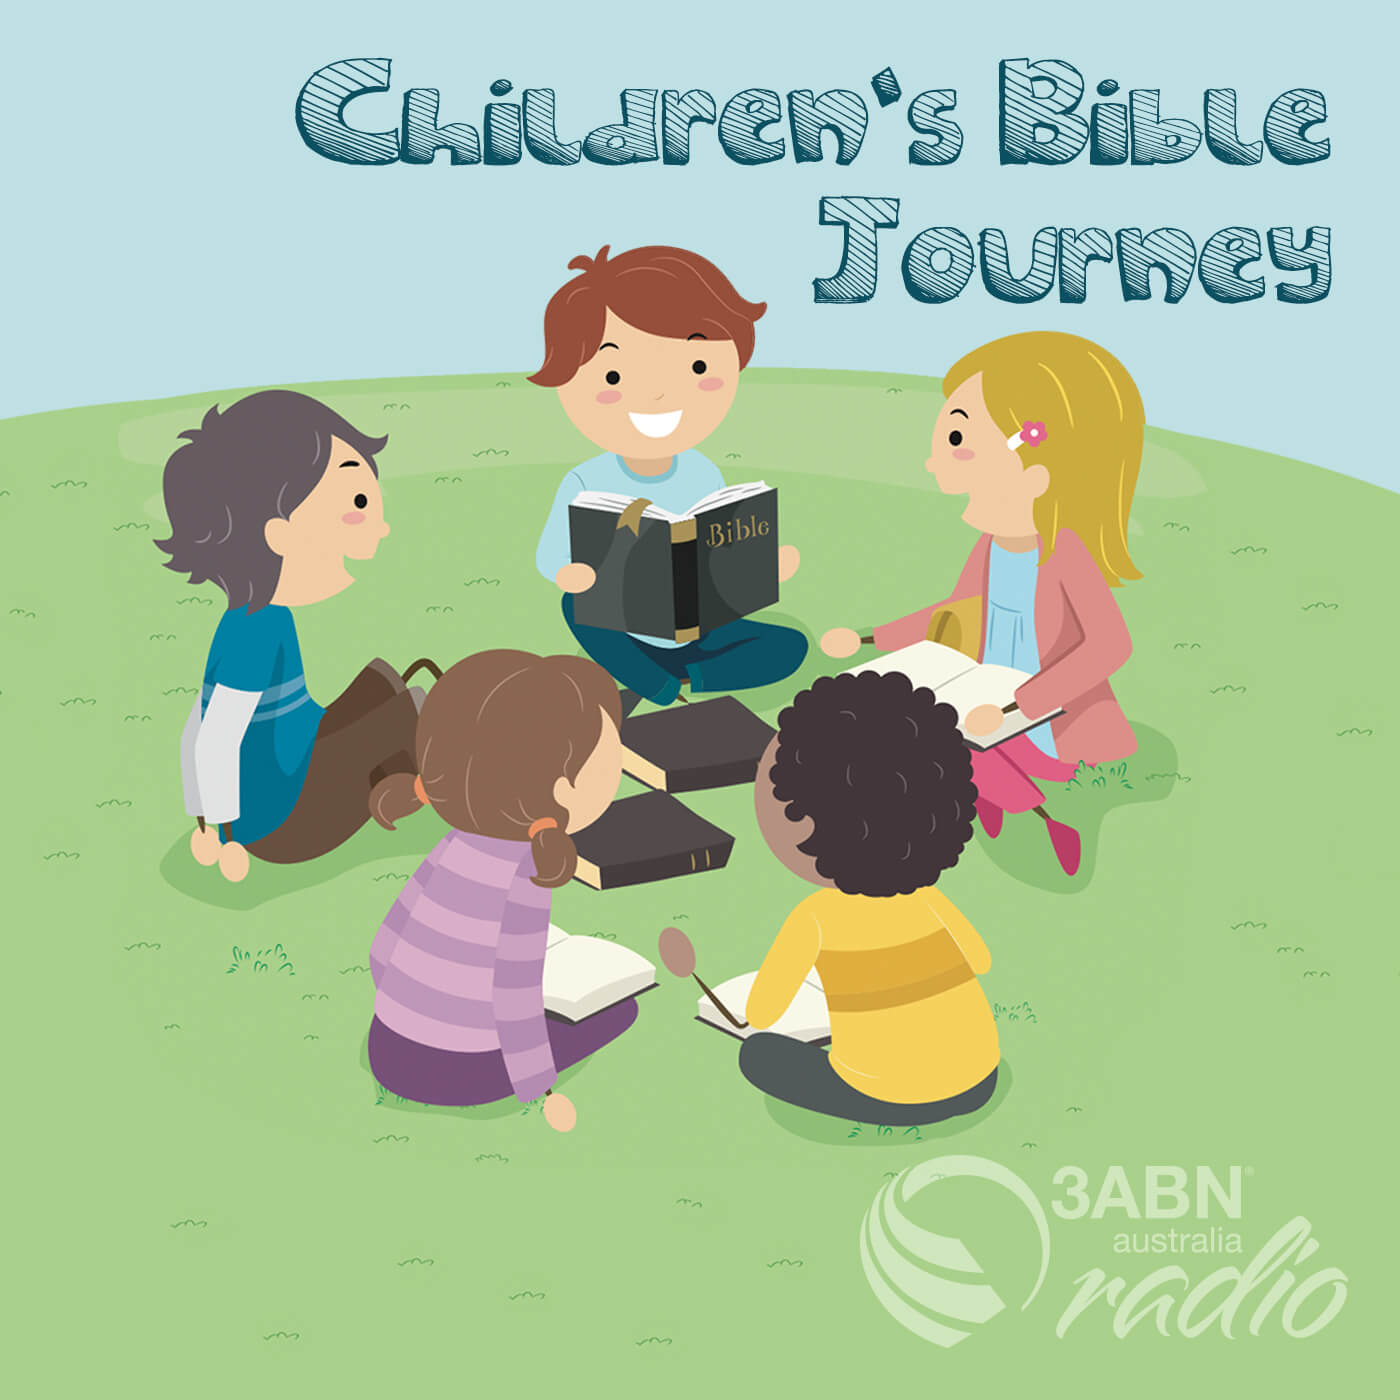 Children's Bible Journey - 2221